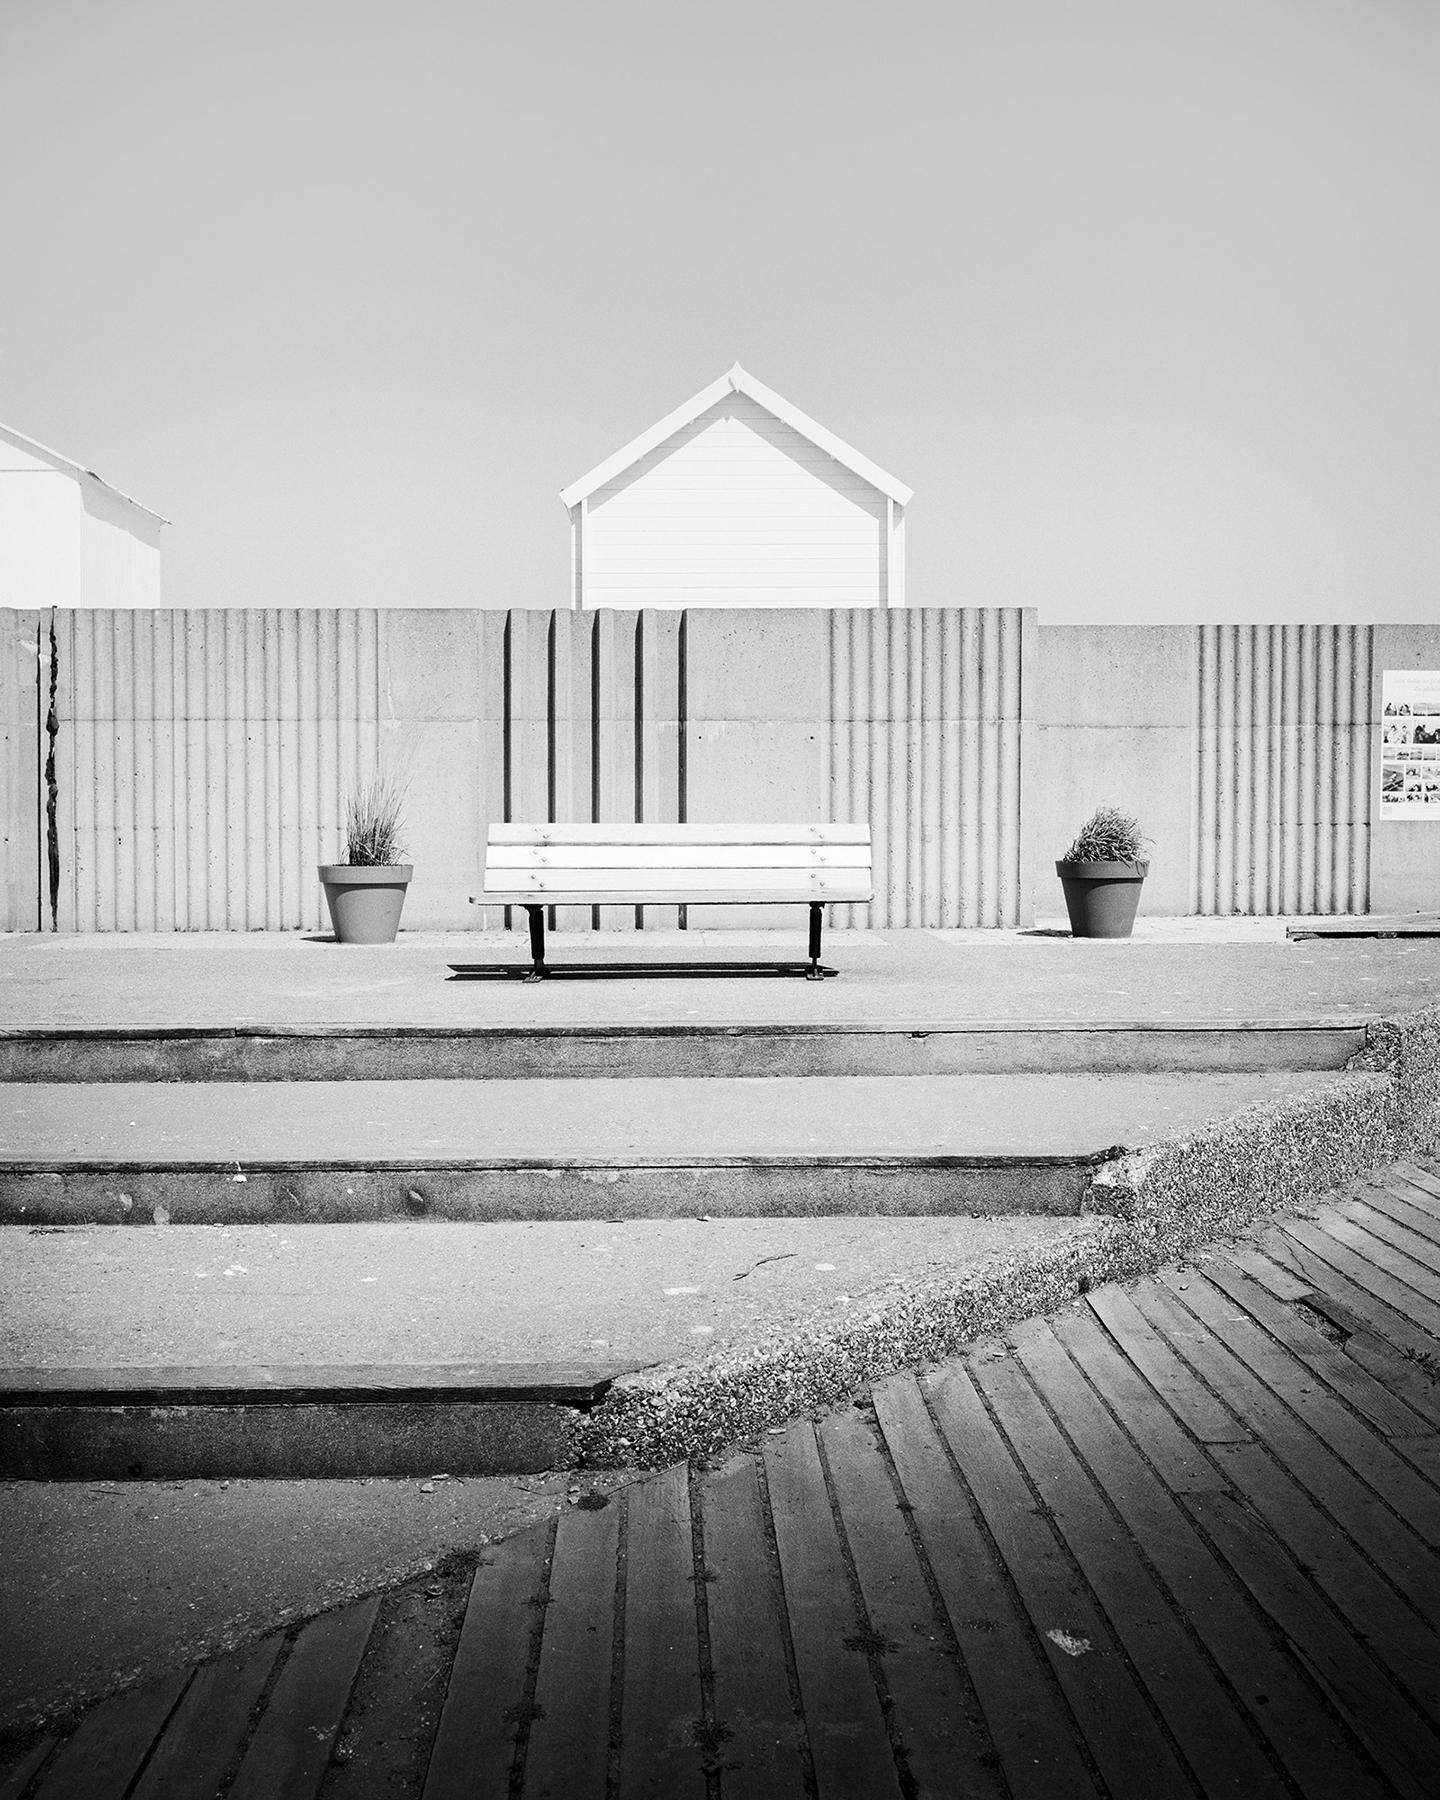 Esplanade, Beach Huts, France, minimalist black and white landscape photography